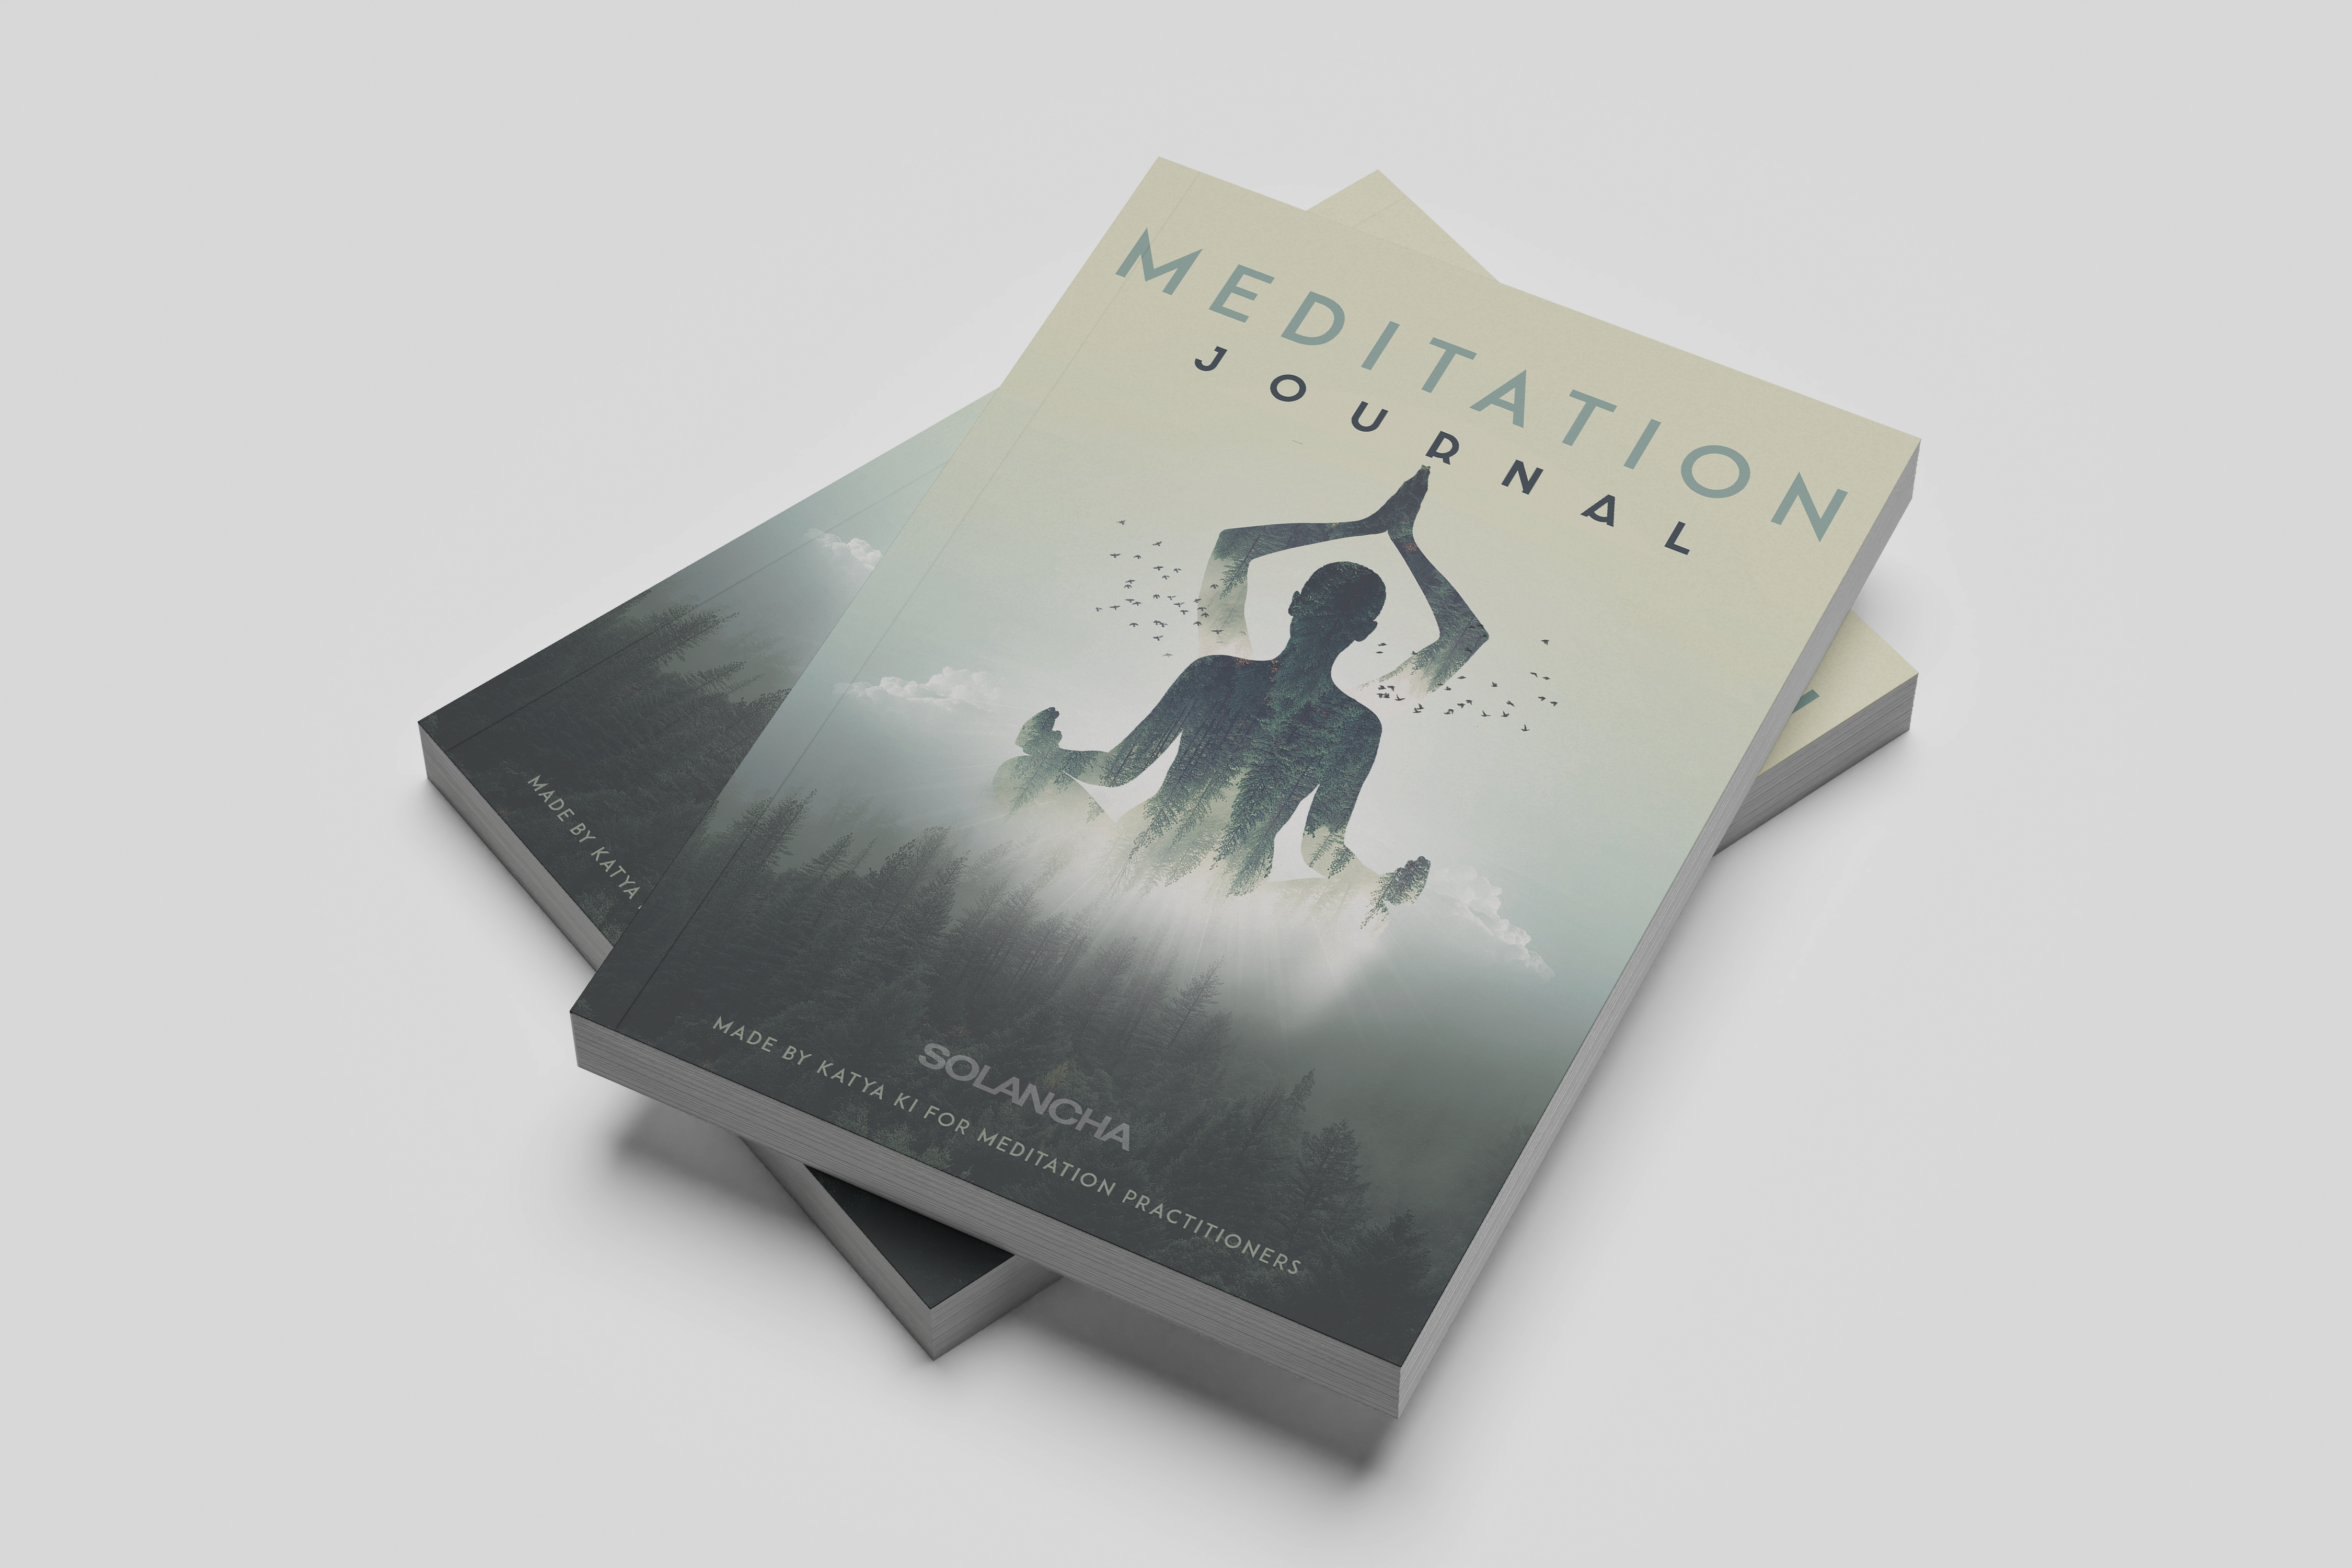 Meditation Journal